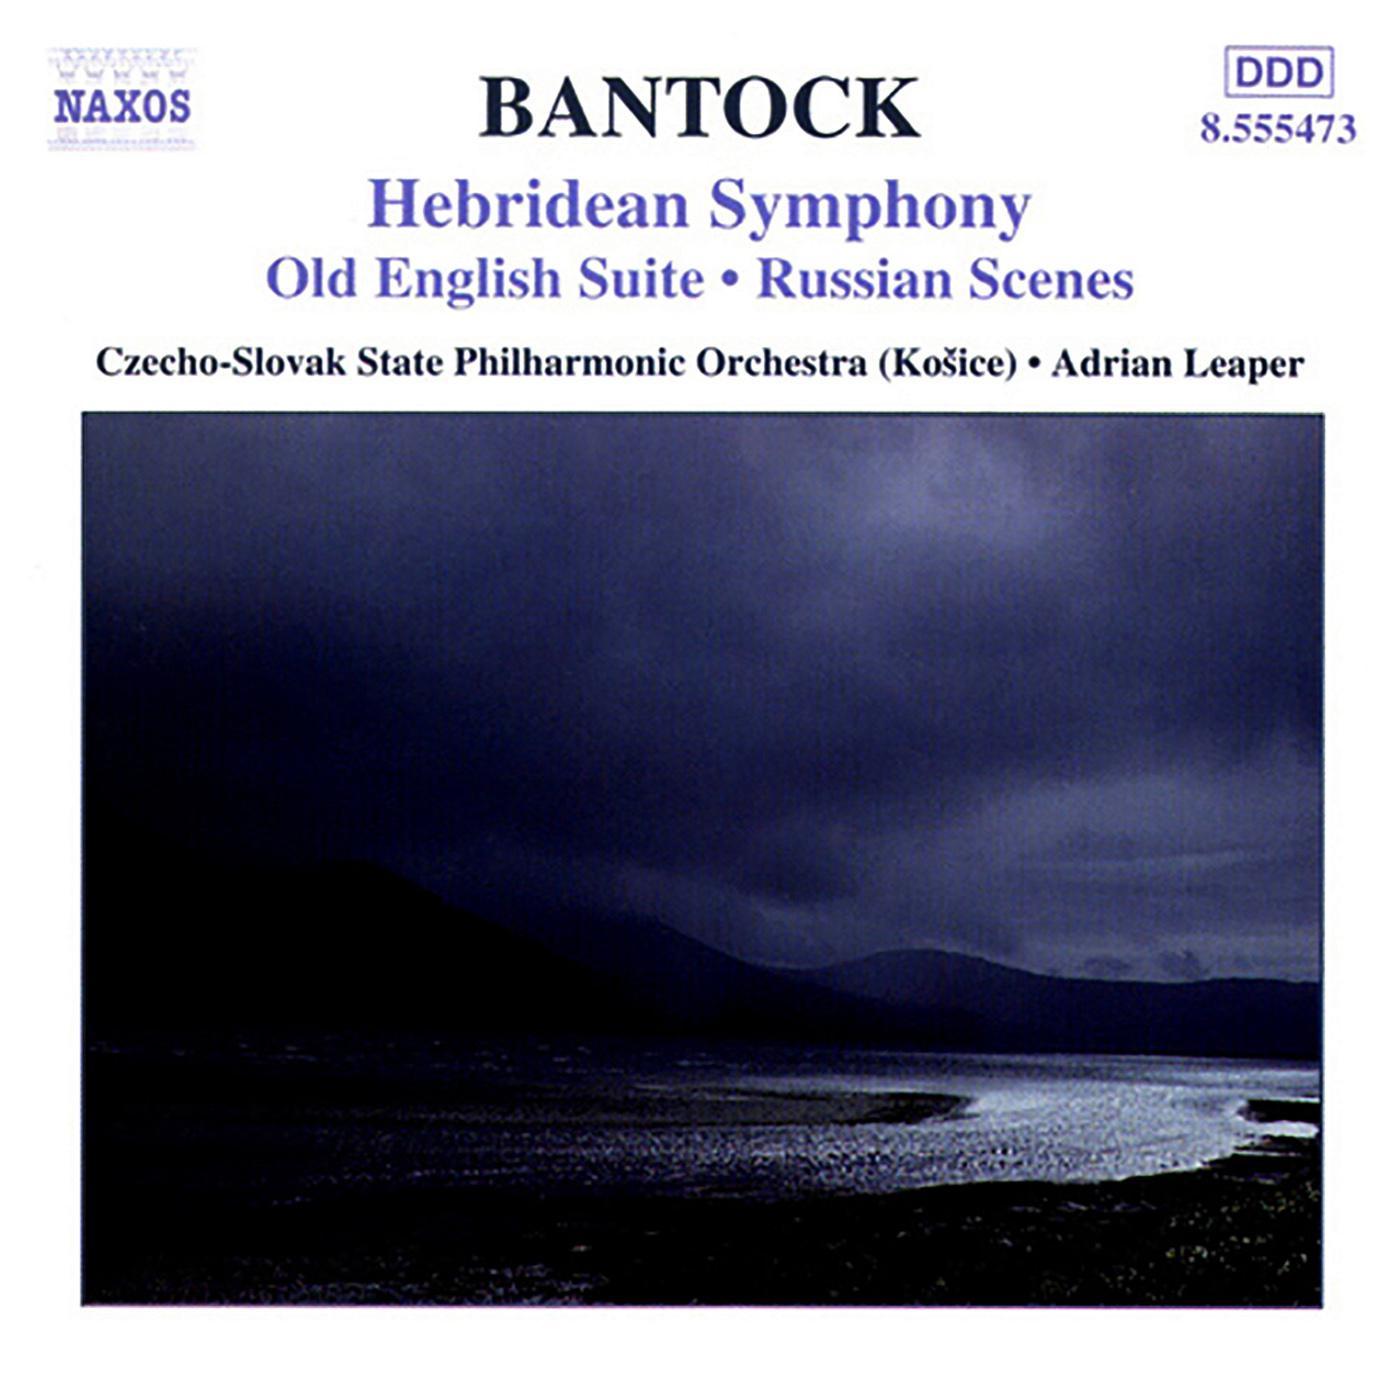 BANTOCK: Hebridean Symphony / Old English Suite